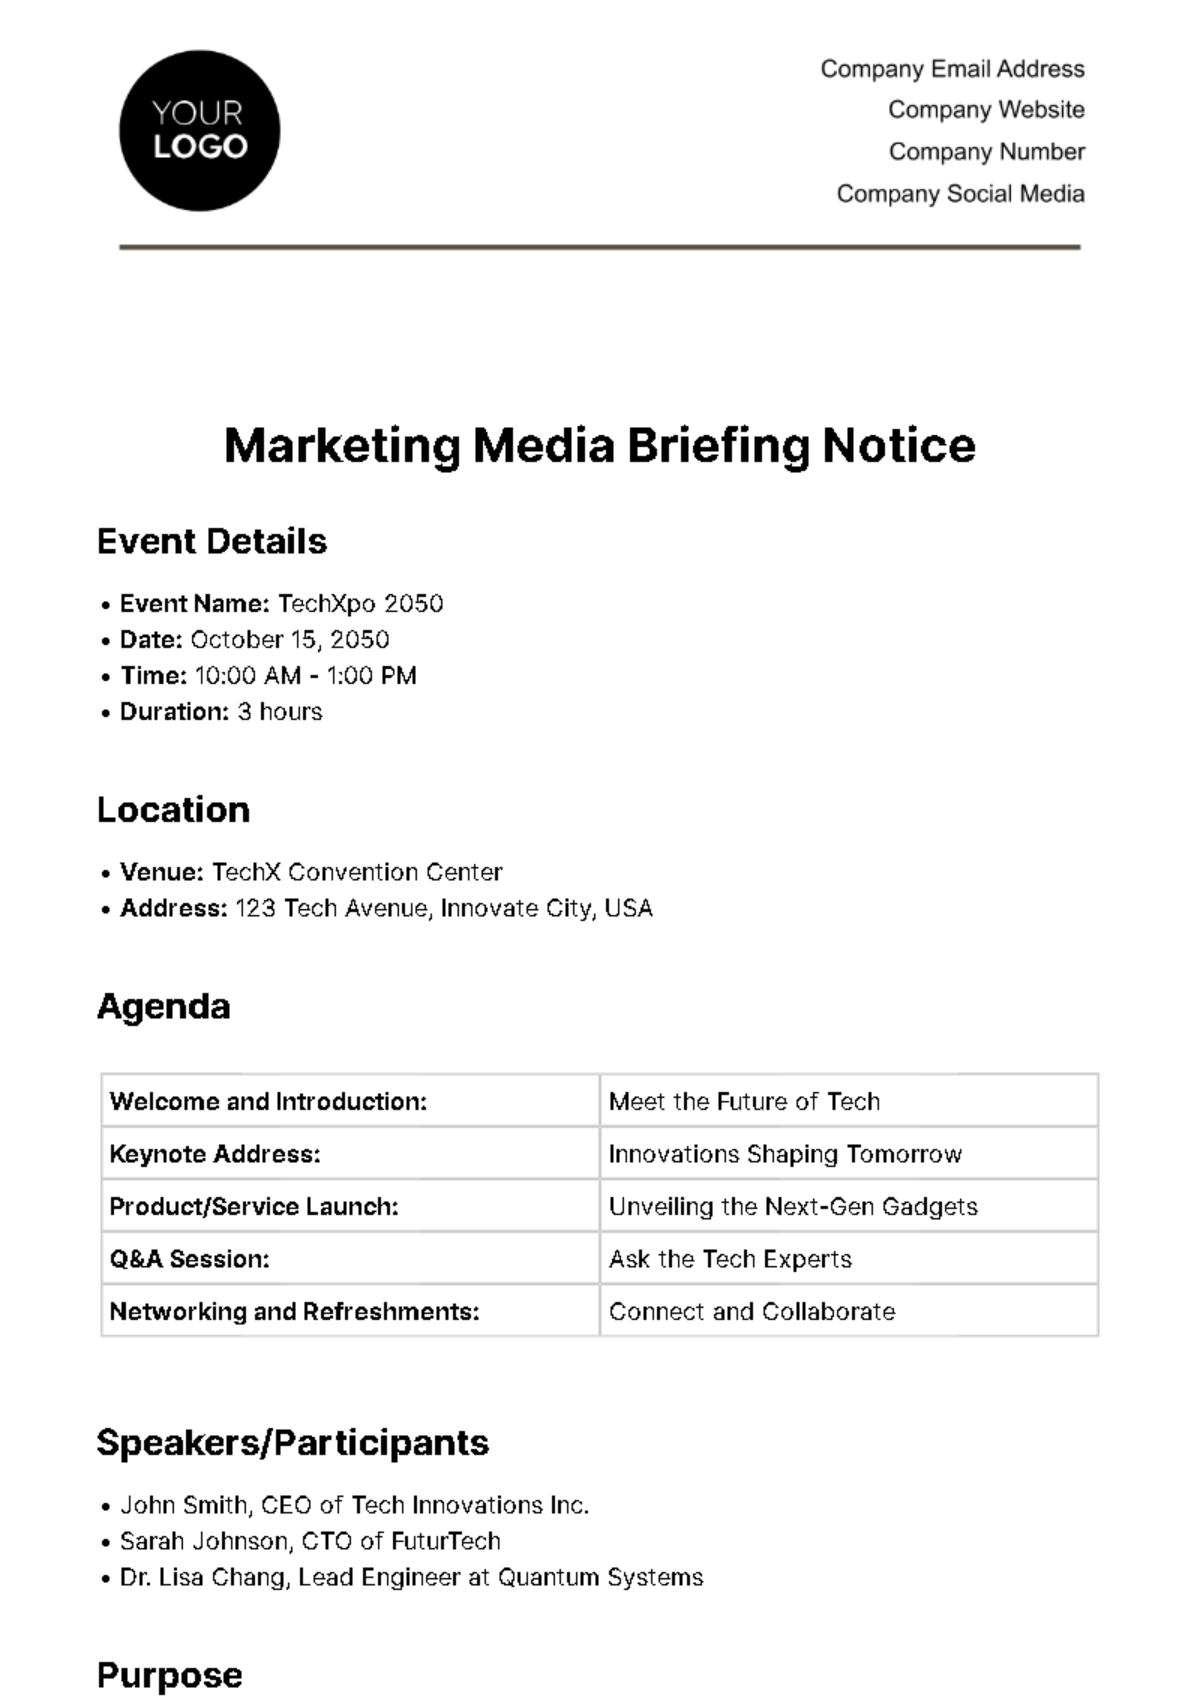 Marketing Media Briefing Notice Template